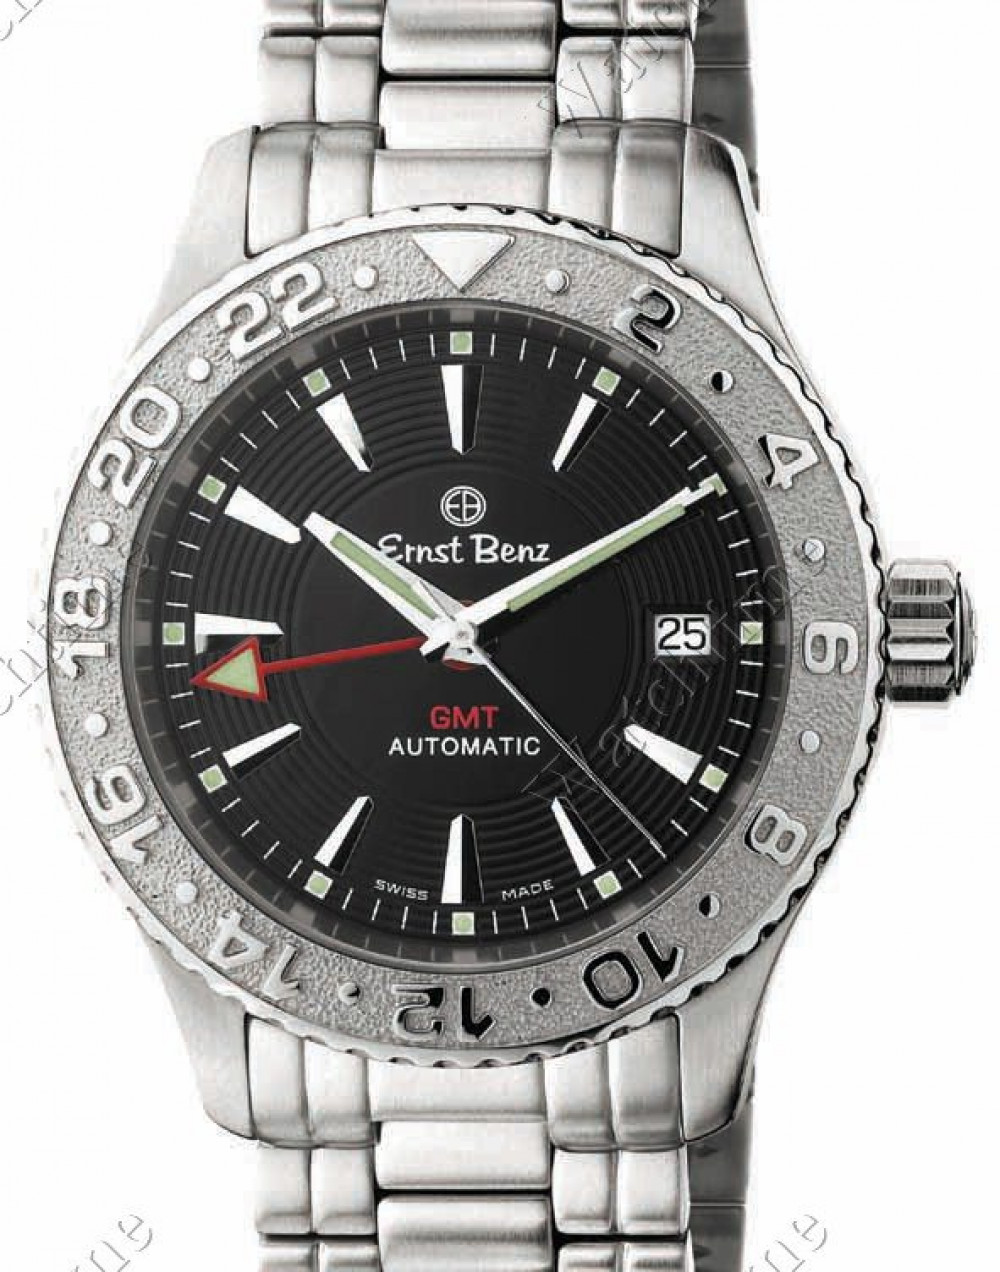 Zegarek firmy Benz Ernst, model Chronoflite GMT